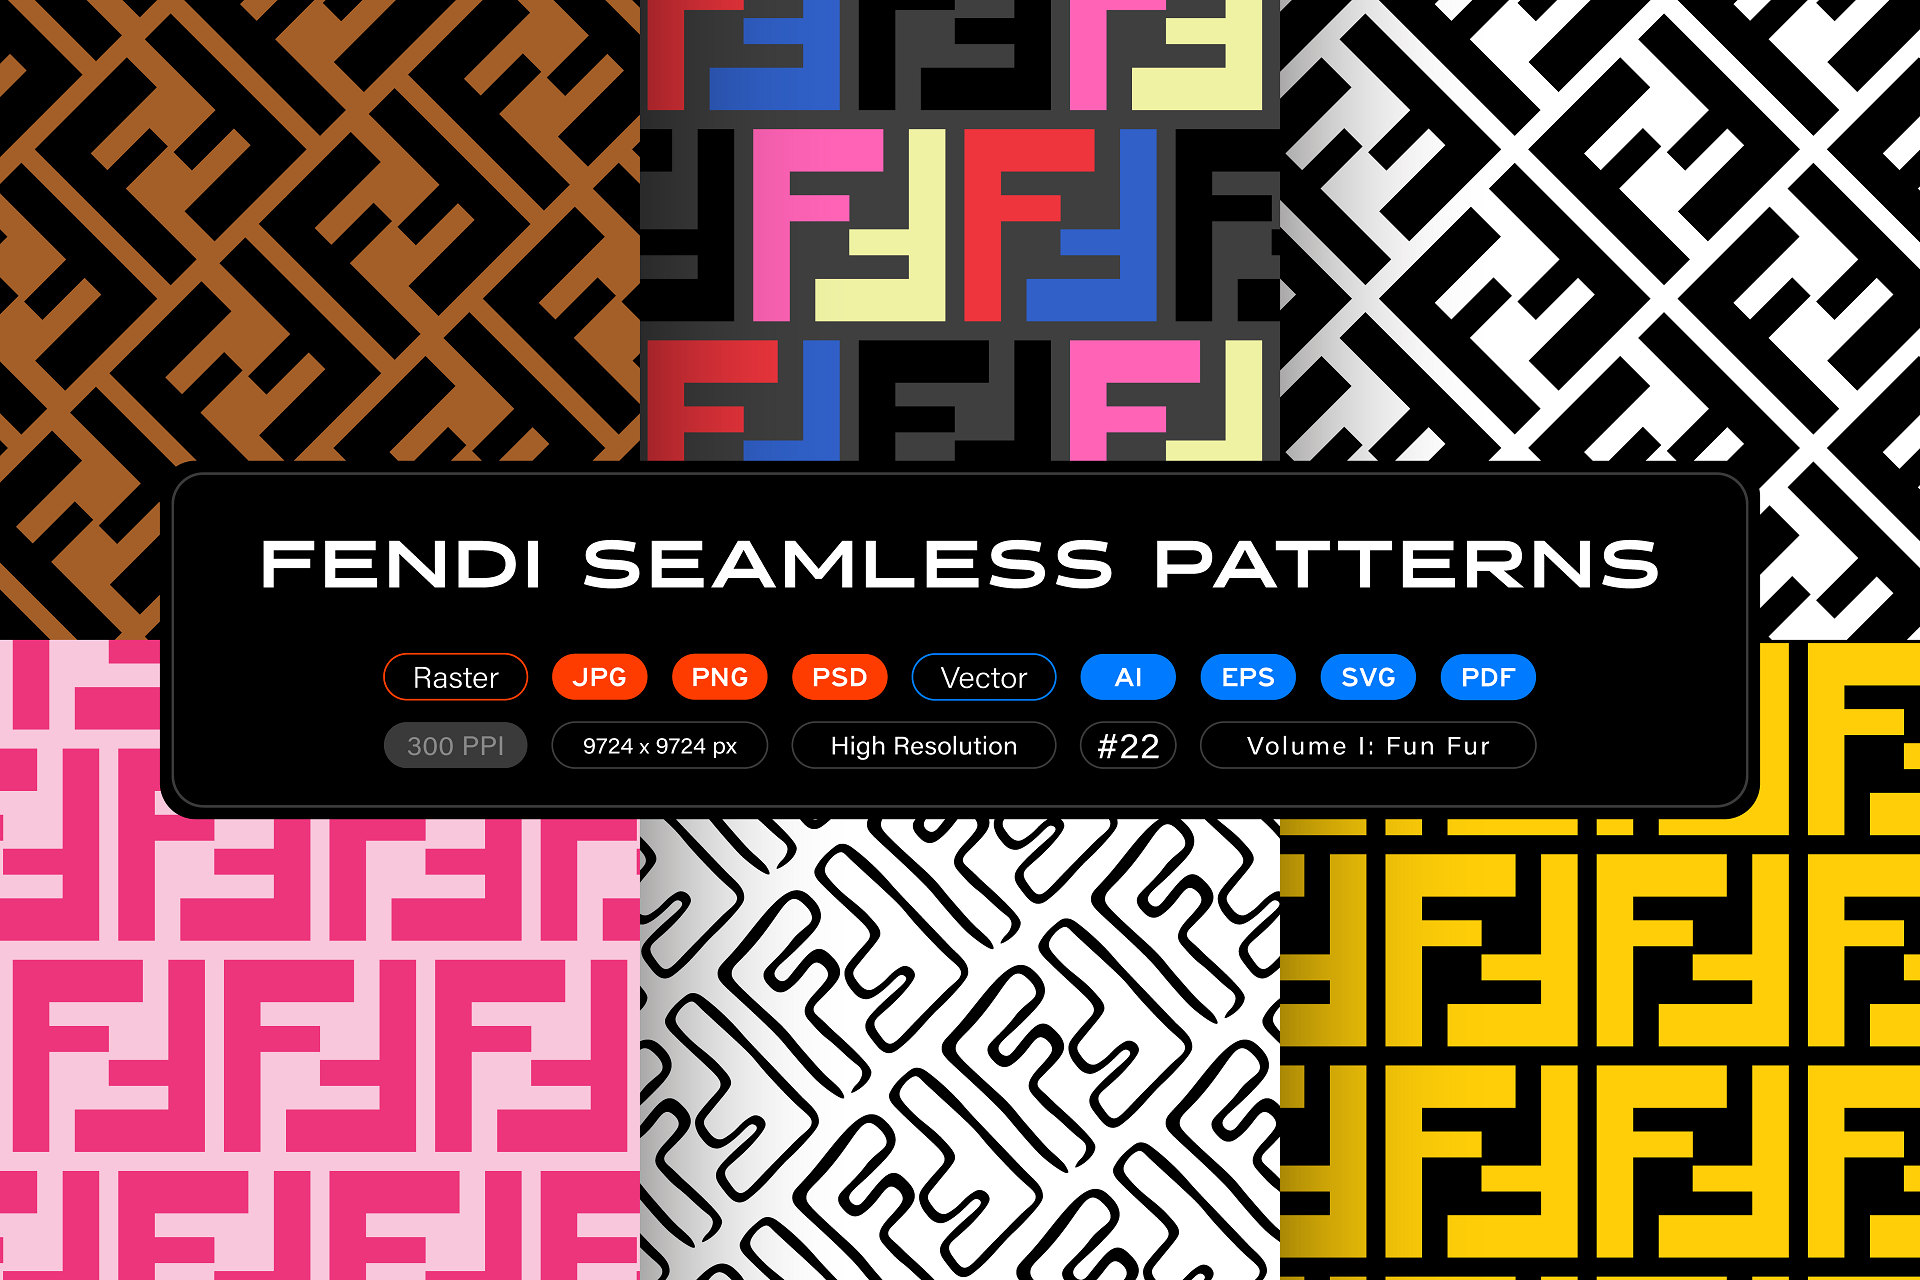 Fendi Seamless Patterns, Vol. 1: Fun Fur by itsfarahbakhsh on DeviantArt